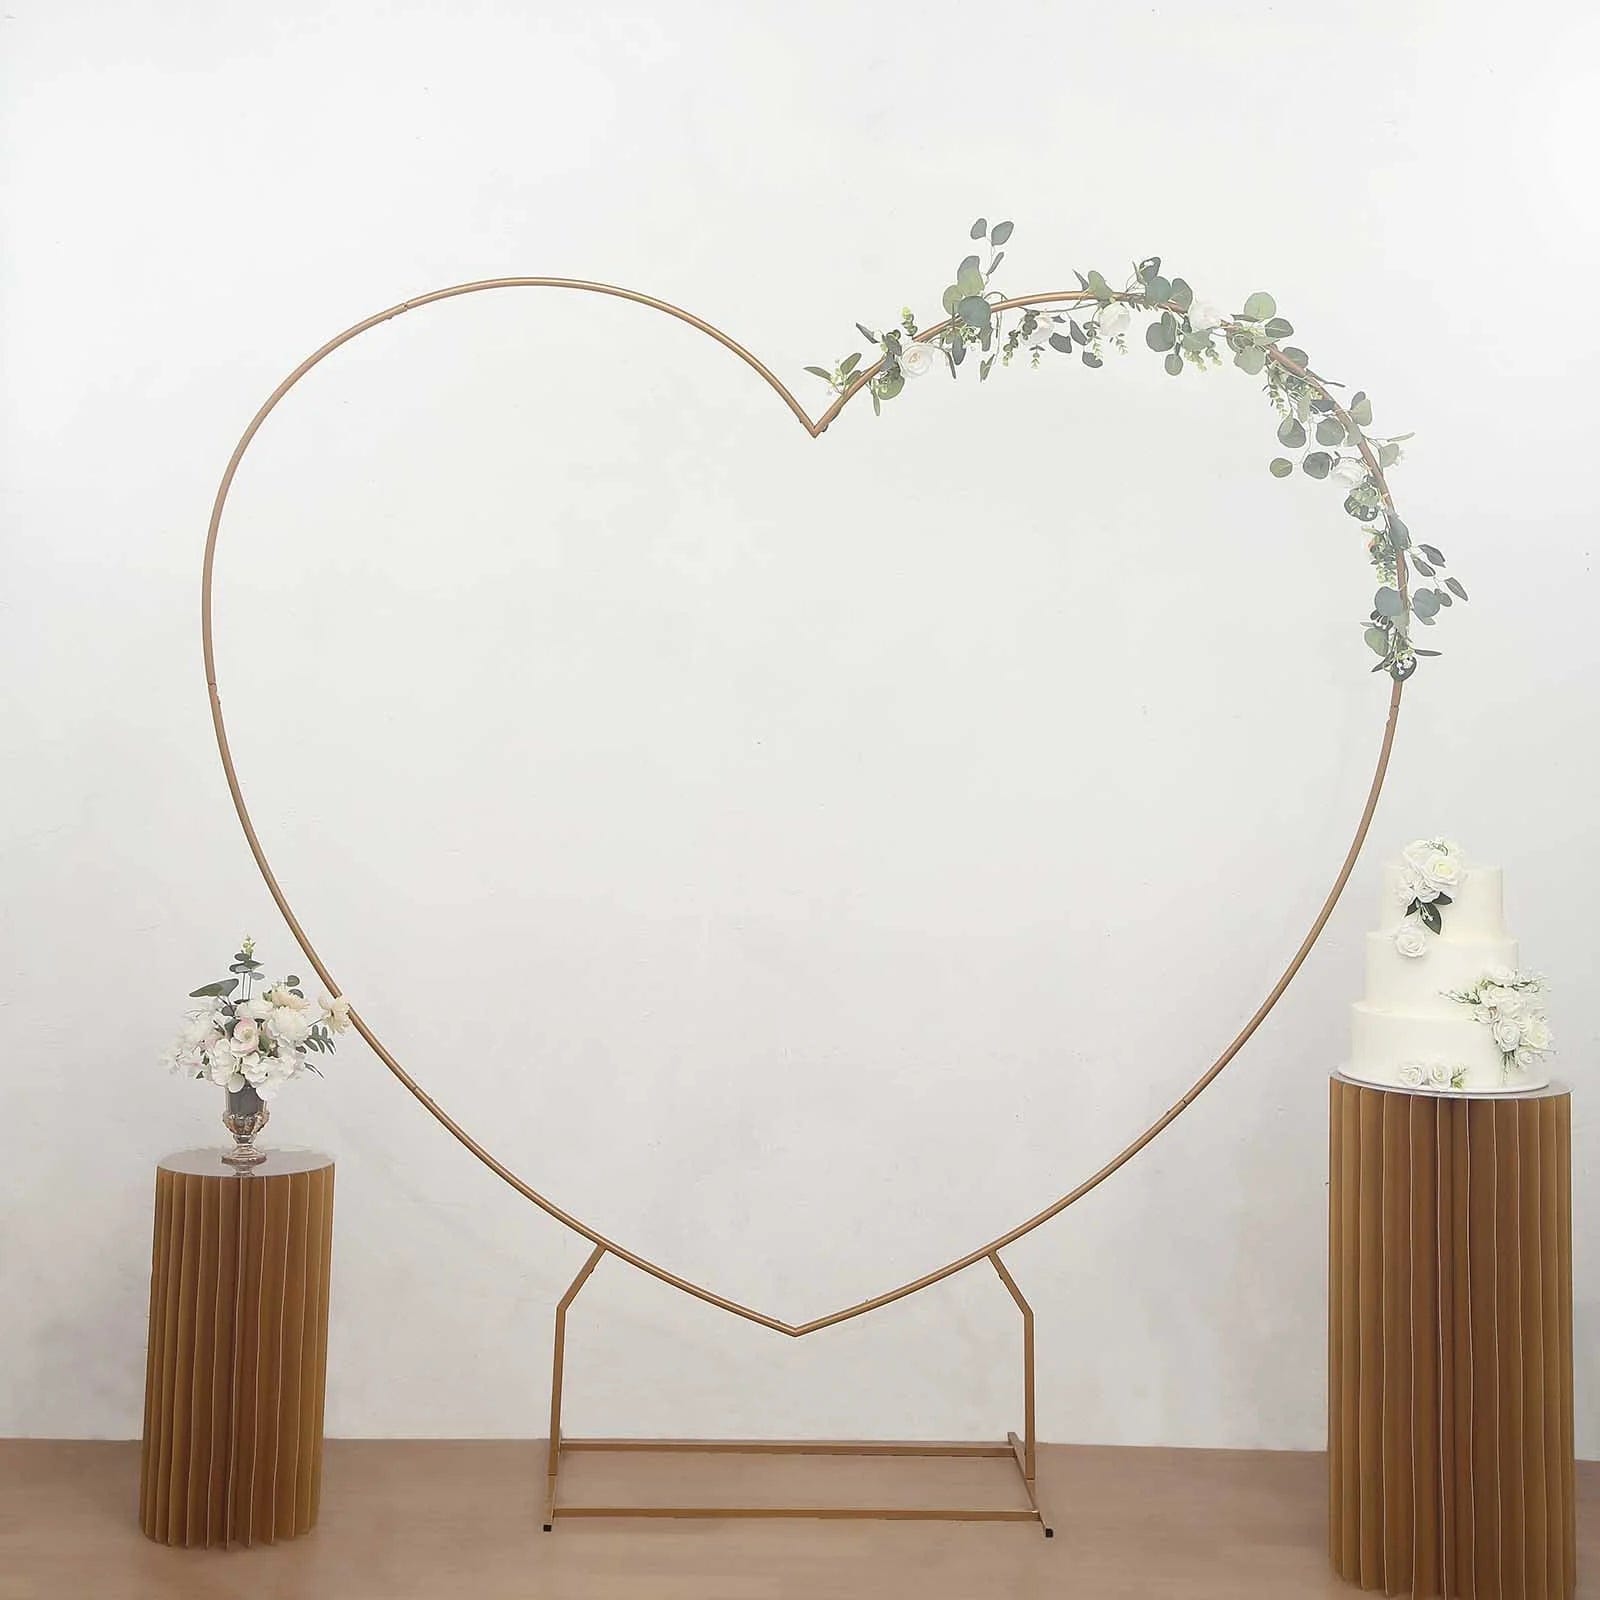 Gold 7 feet Metal Heart Shape Wedding Arch Photo Backdrop Stand